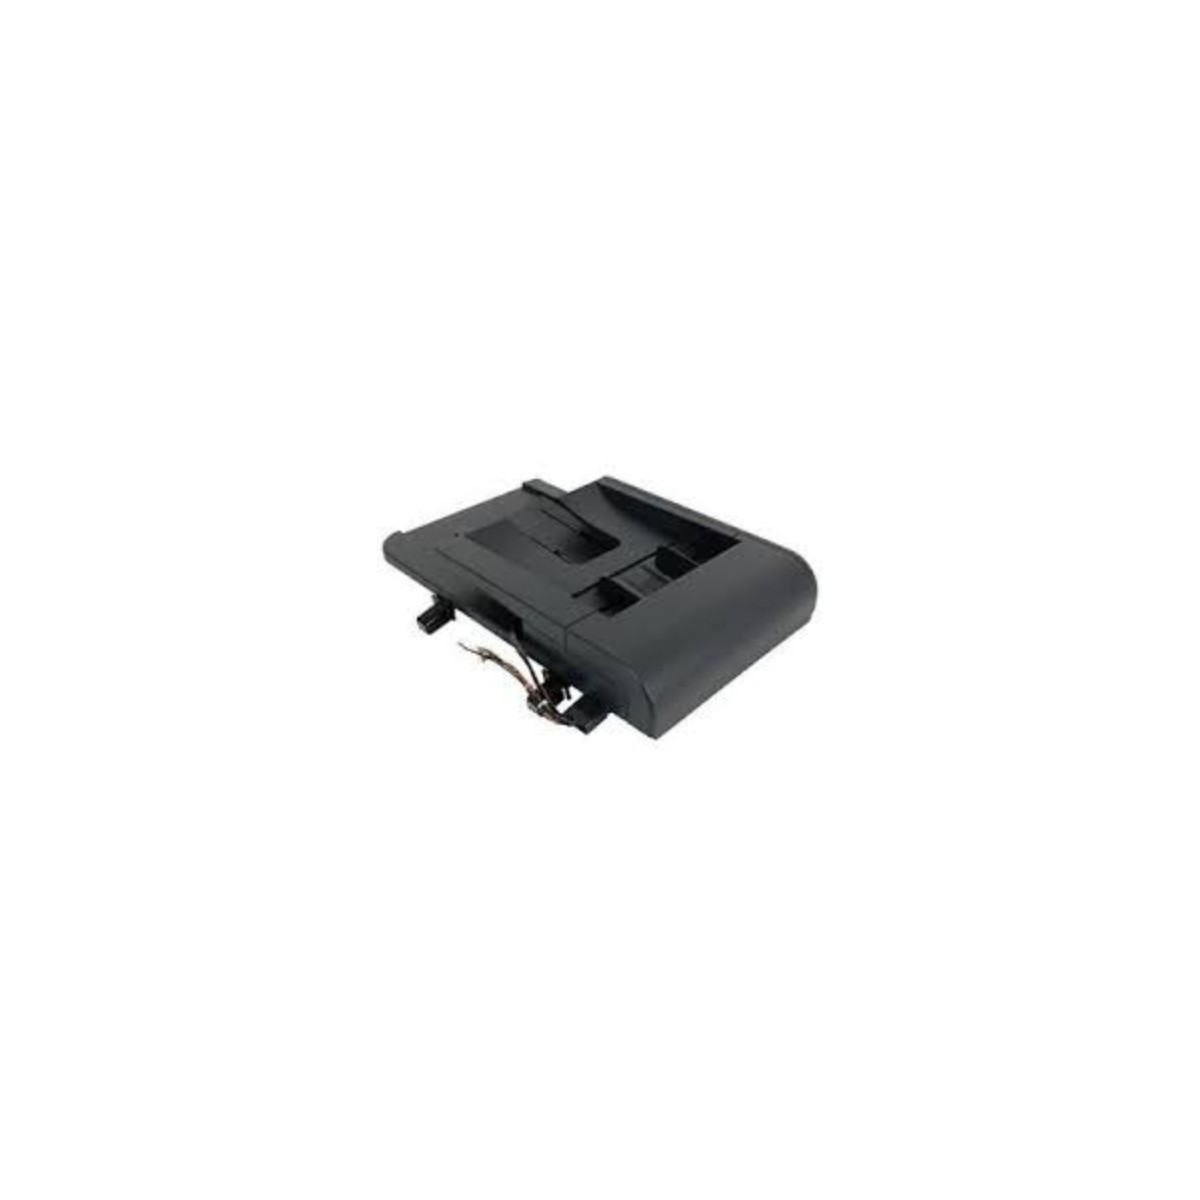 HP CZ271-60024 - Auto document feeder (ADF) - HP - Laserjet M570 - Black